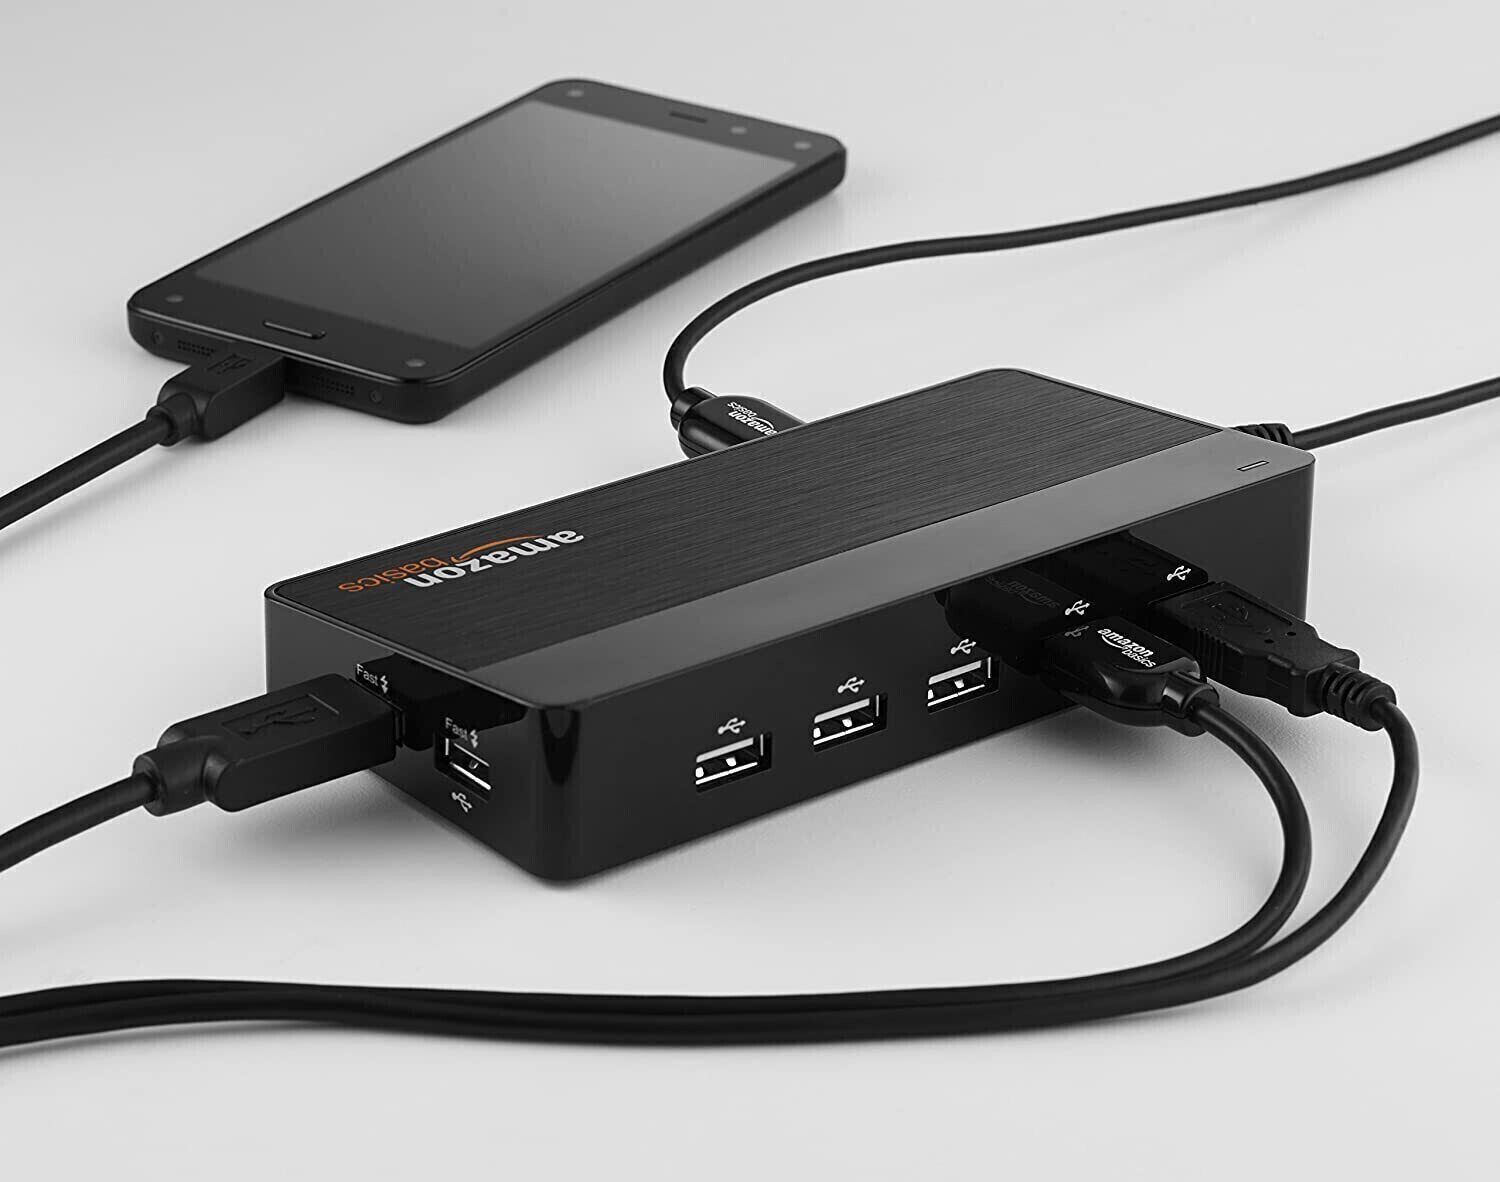 Amazon Basics 10-Port USB 2.0 Hub w/ 2 Fast Charging Port Power Adapter Charger 